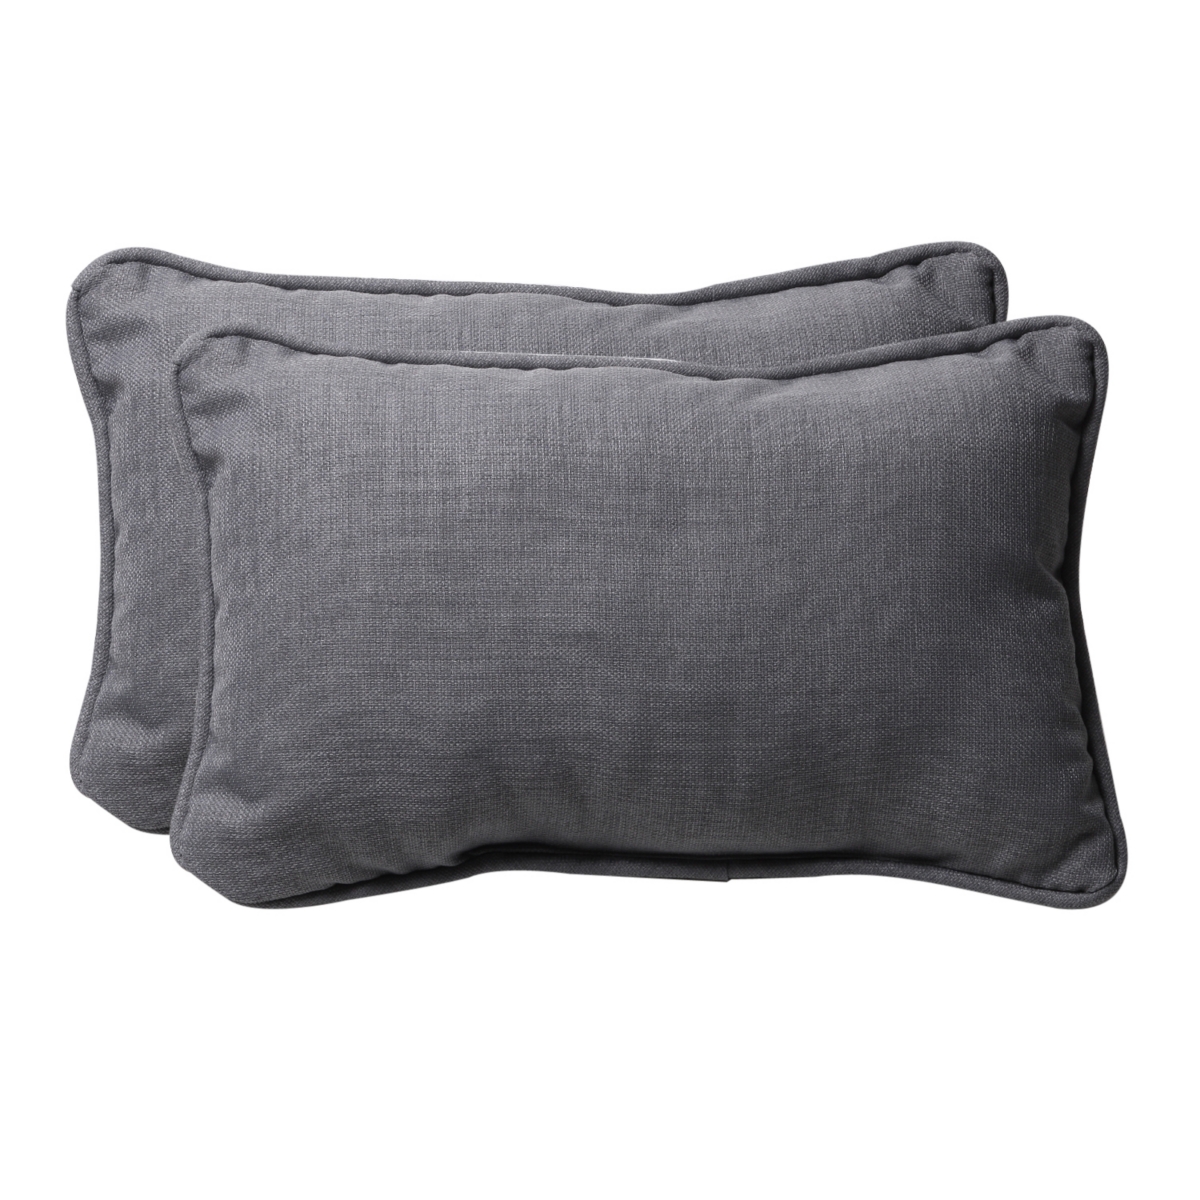 UPC 751379449890 product image for Rave Graphite Rectangular Throw Pillow, Set of 2 | upcitemdb.com